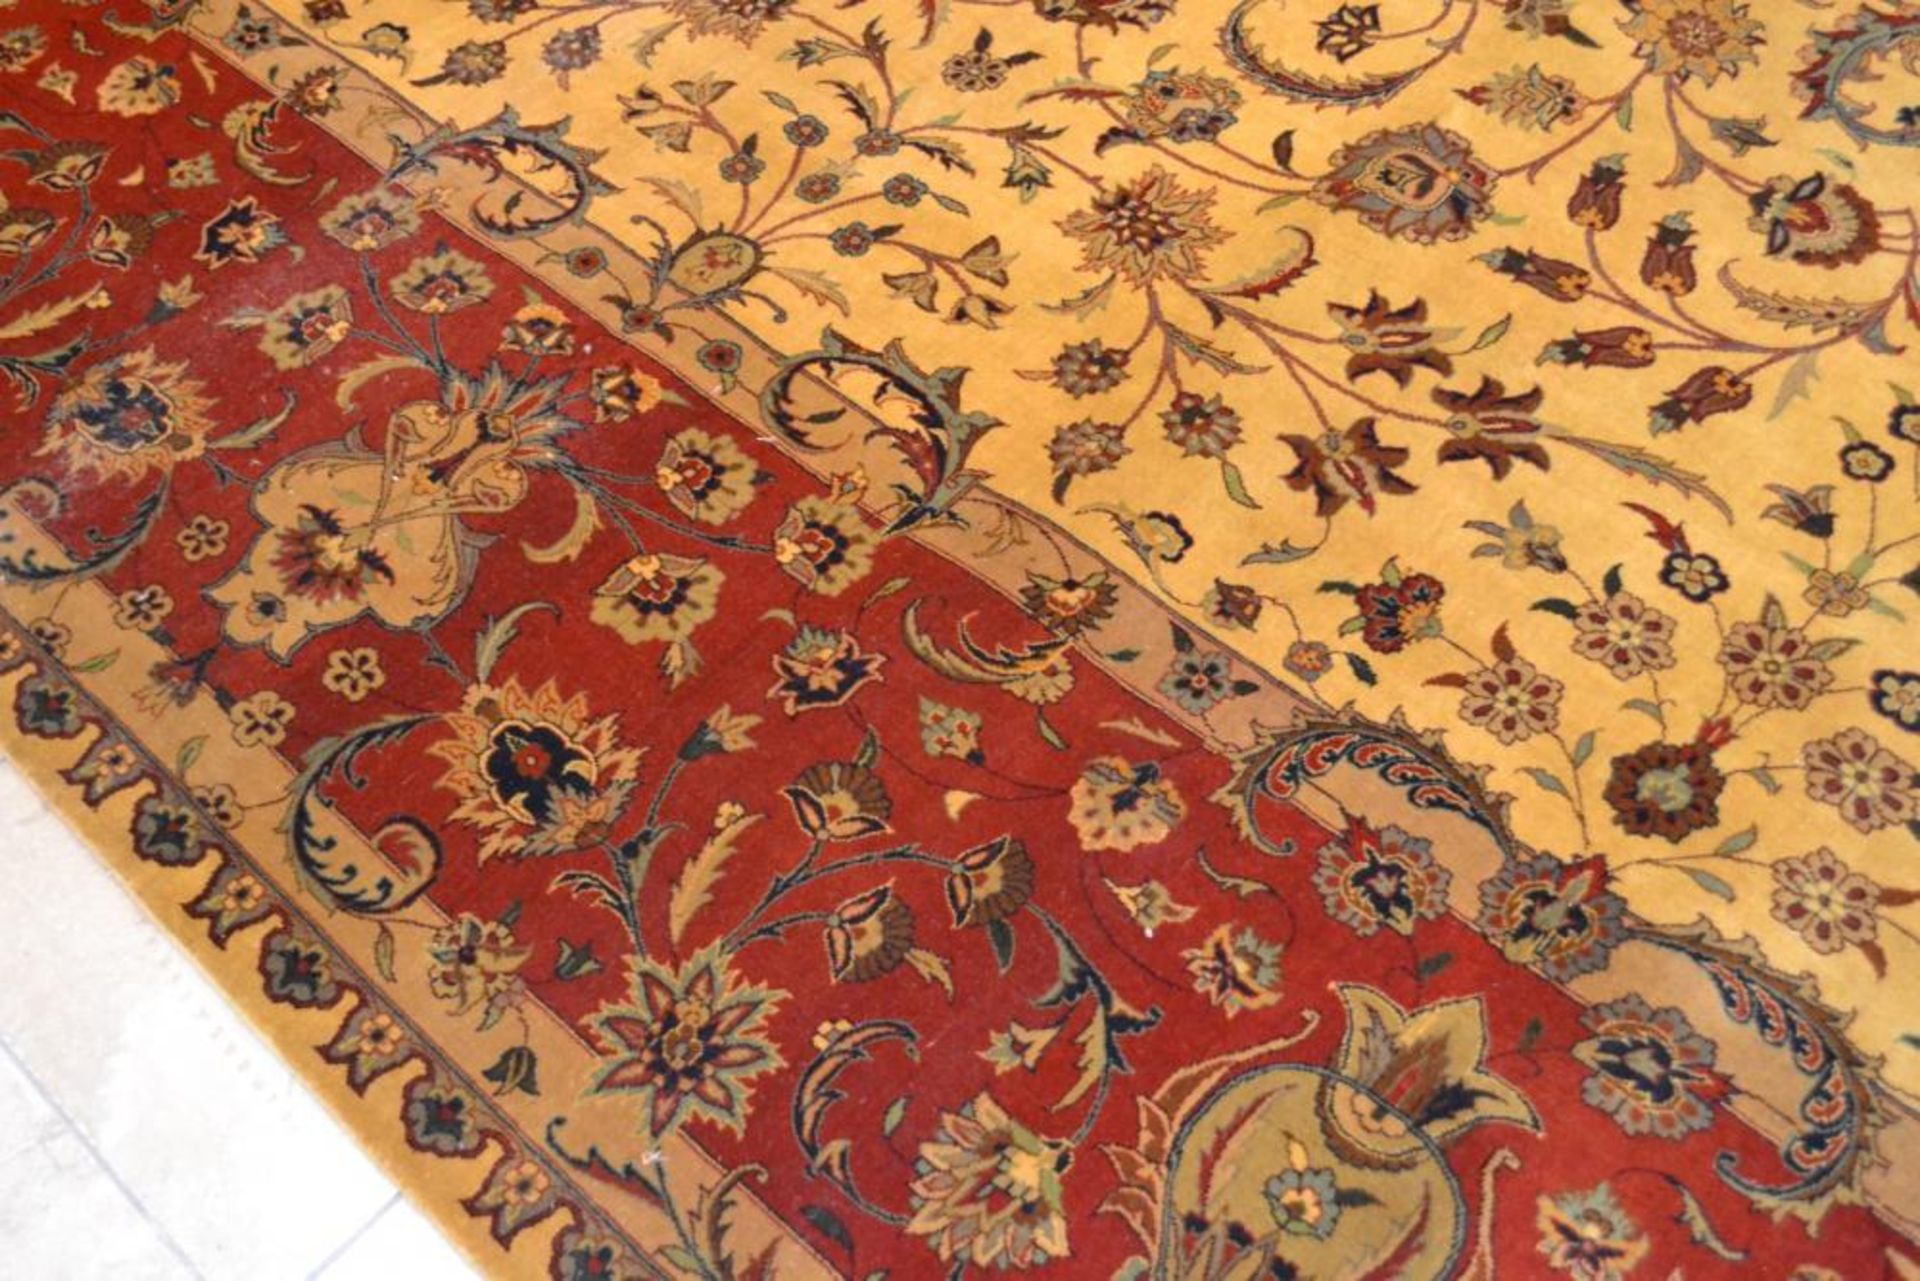 1 x Very Fine Top Quality Pakistan Tabriz Design Carpet - 320 Knot Count - Dimensions: 546x376cm - N - Image 20 of 31